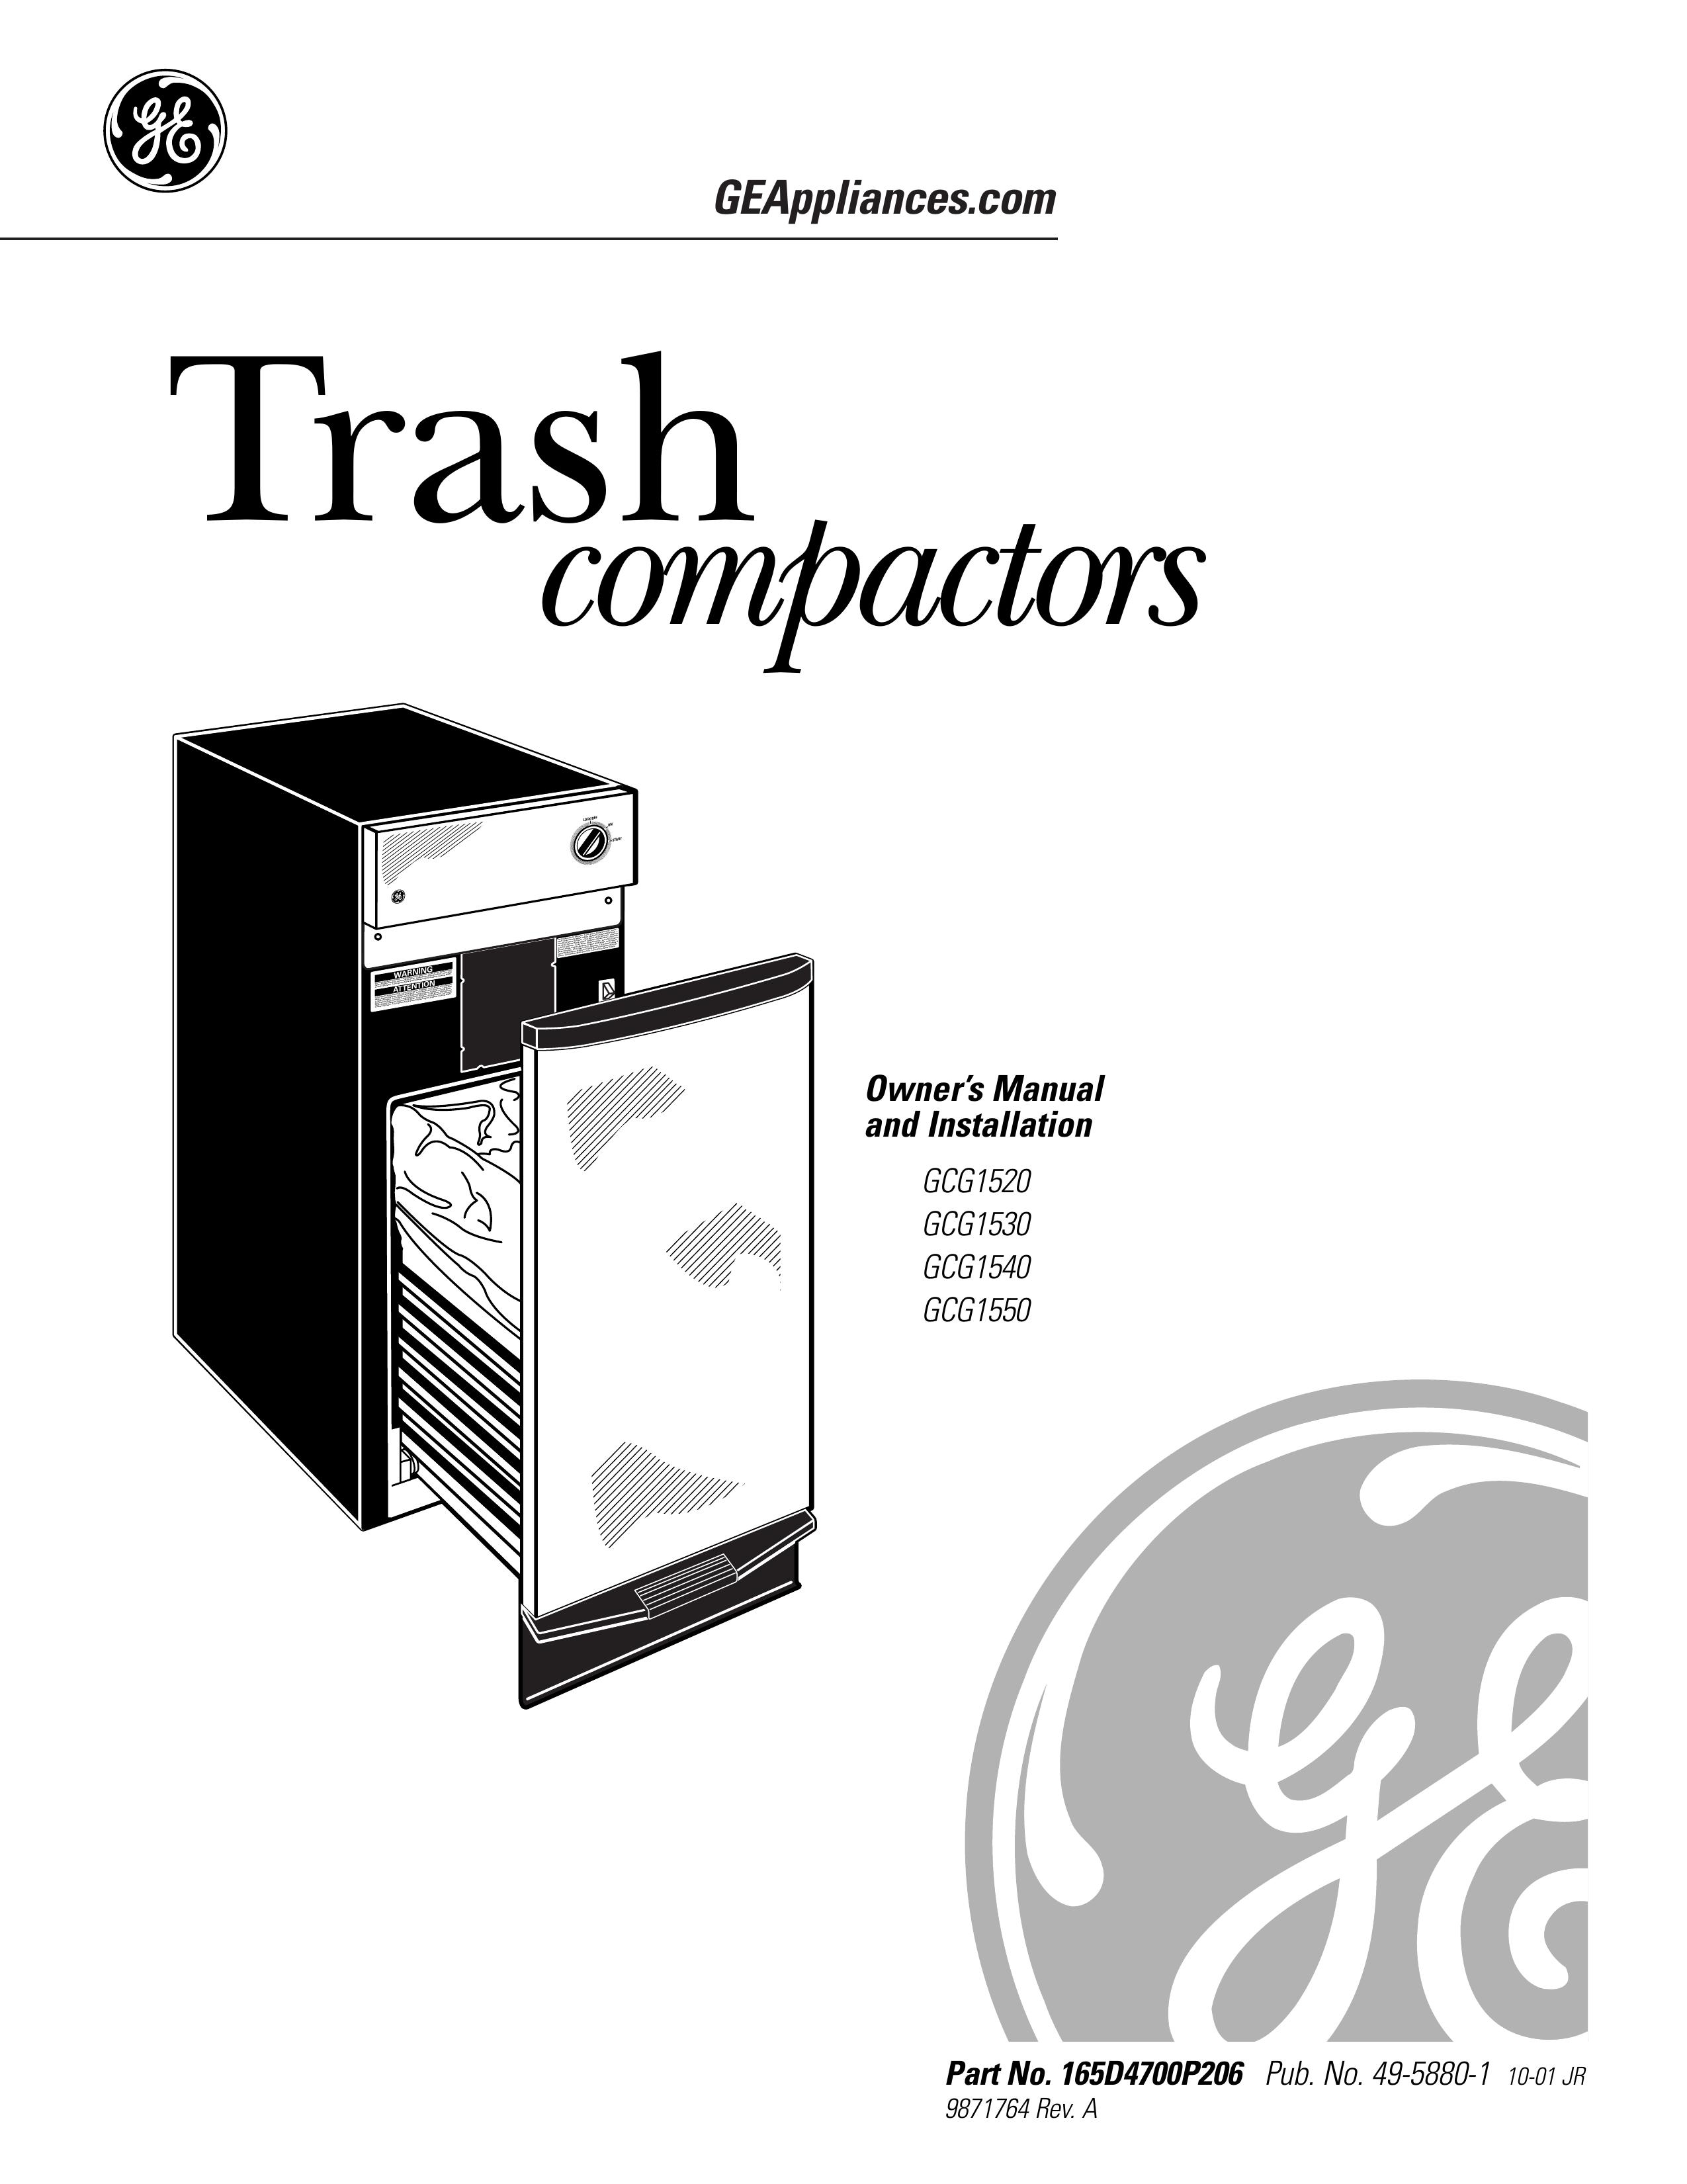 GE GCG1520 Trash Compactor User Manual